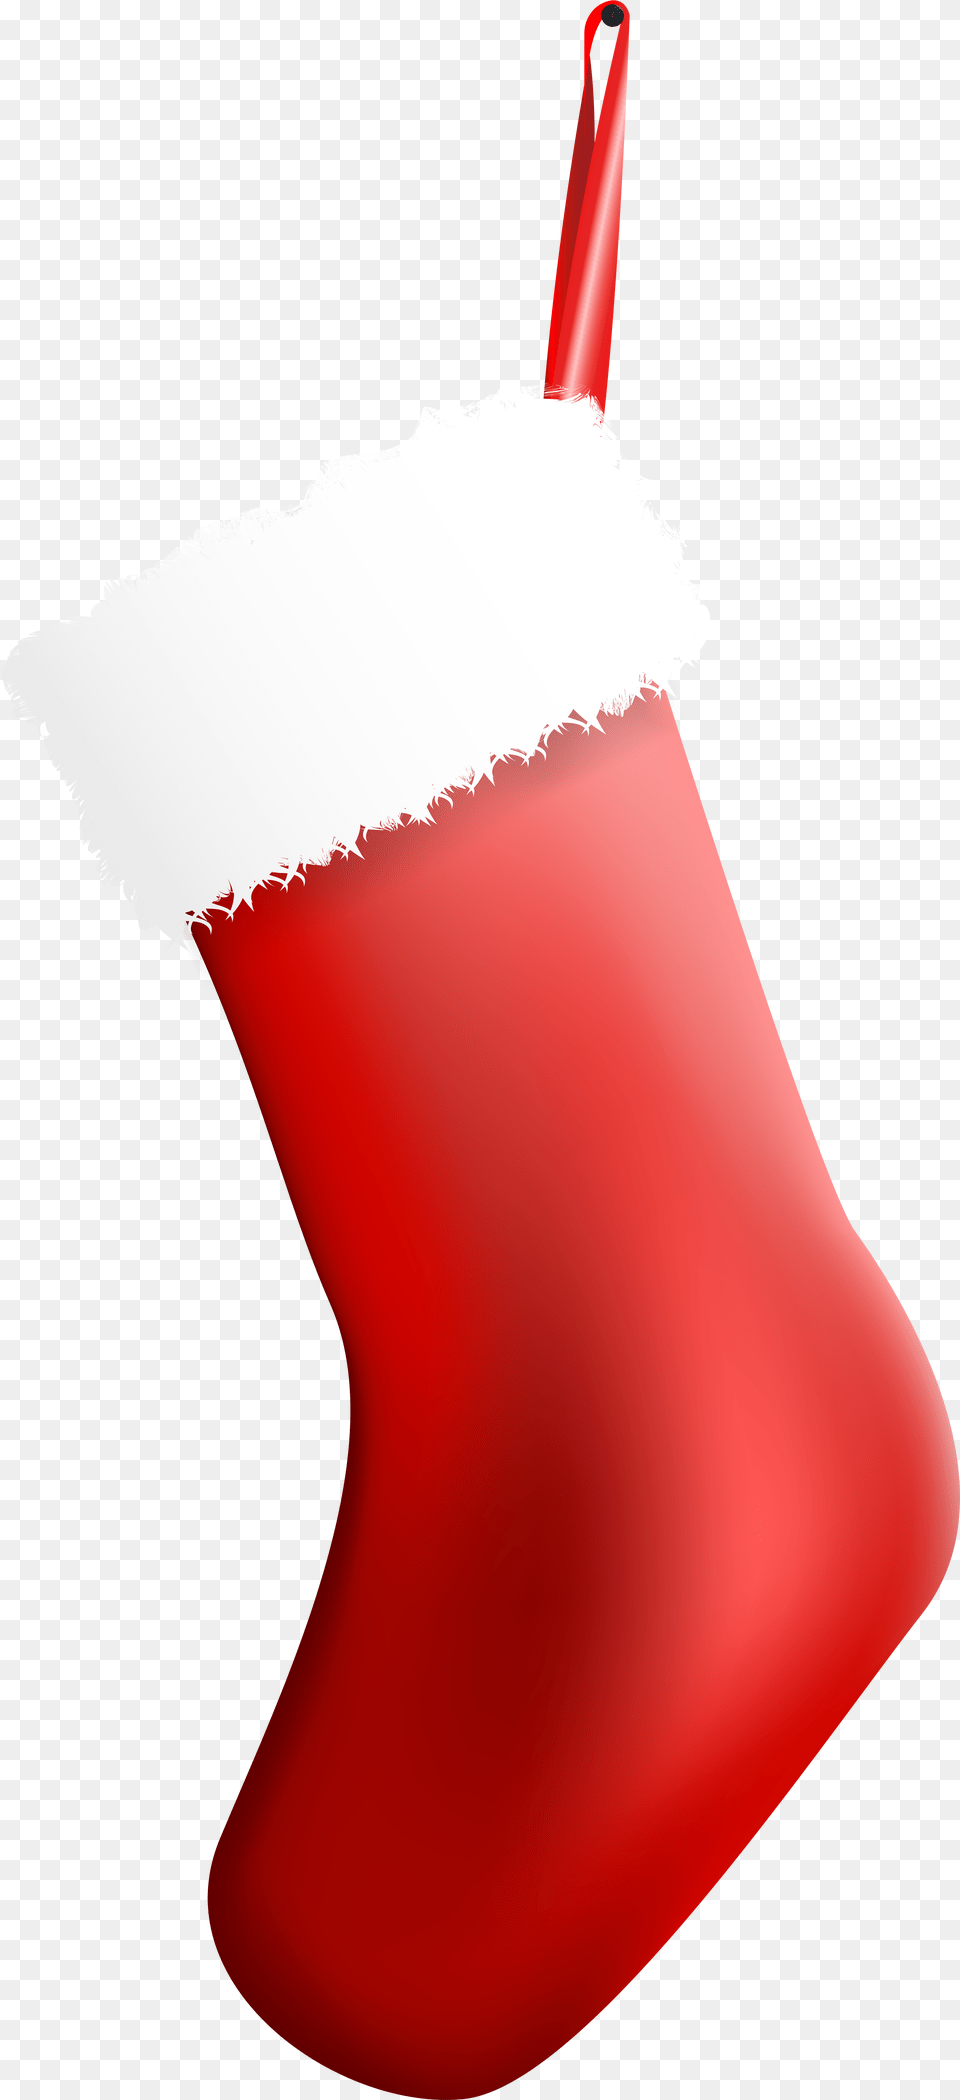 Christmas Stocking Clip Art Christmas Stocking Clip Art, Clothing, Hosiery, Christmas Decorations, Christmas Stocking Png